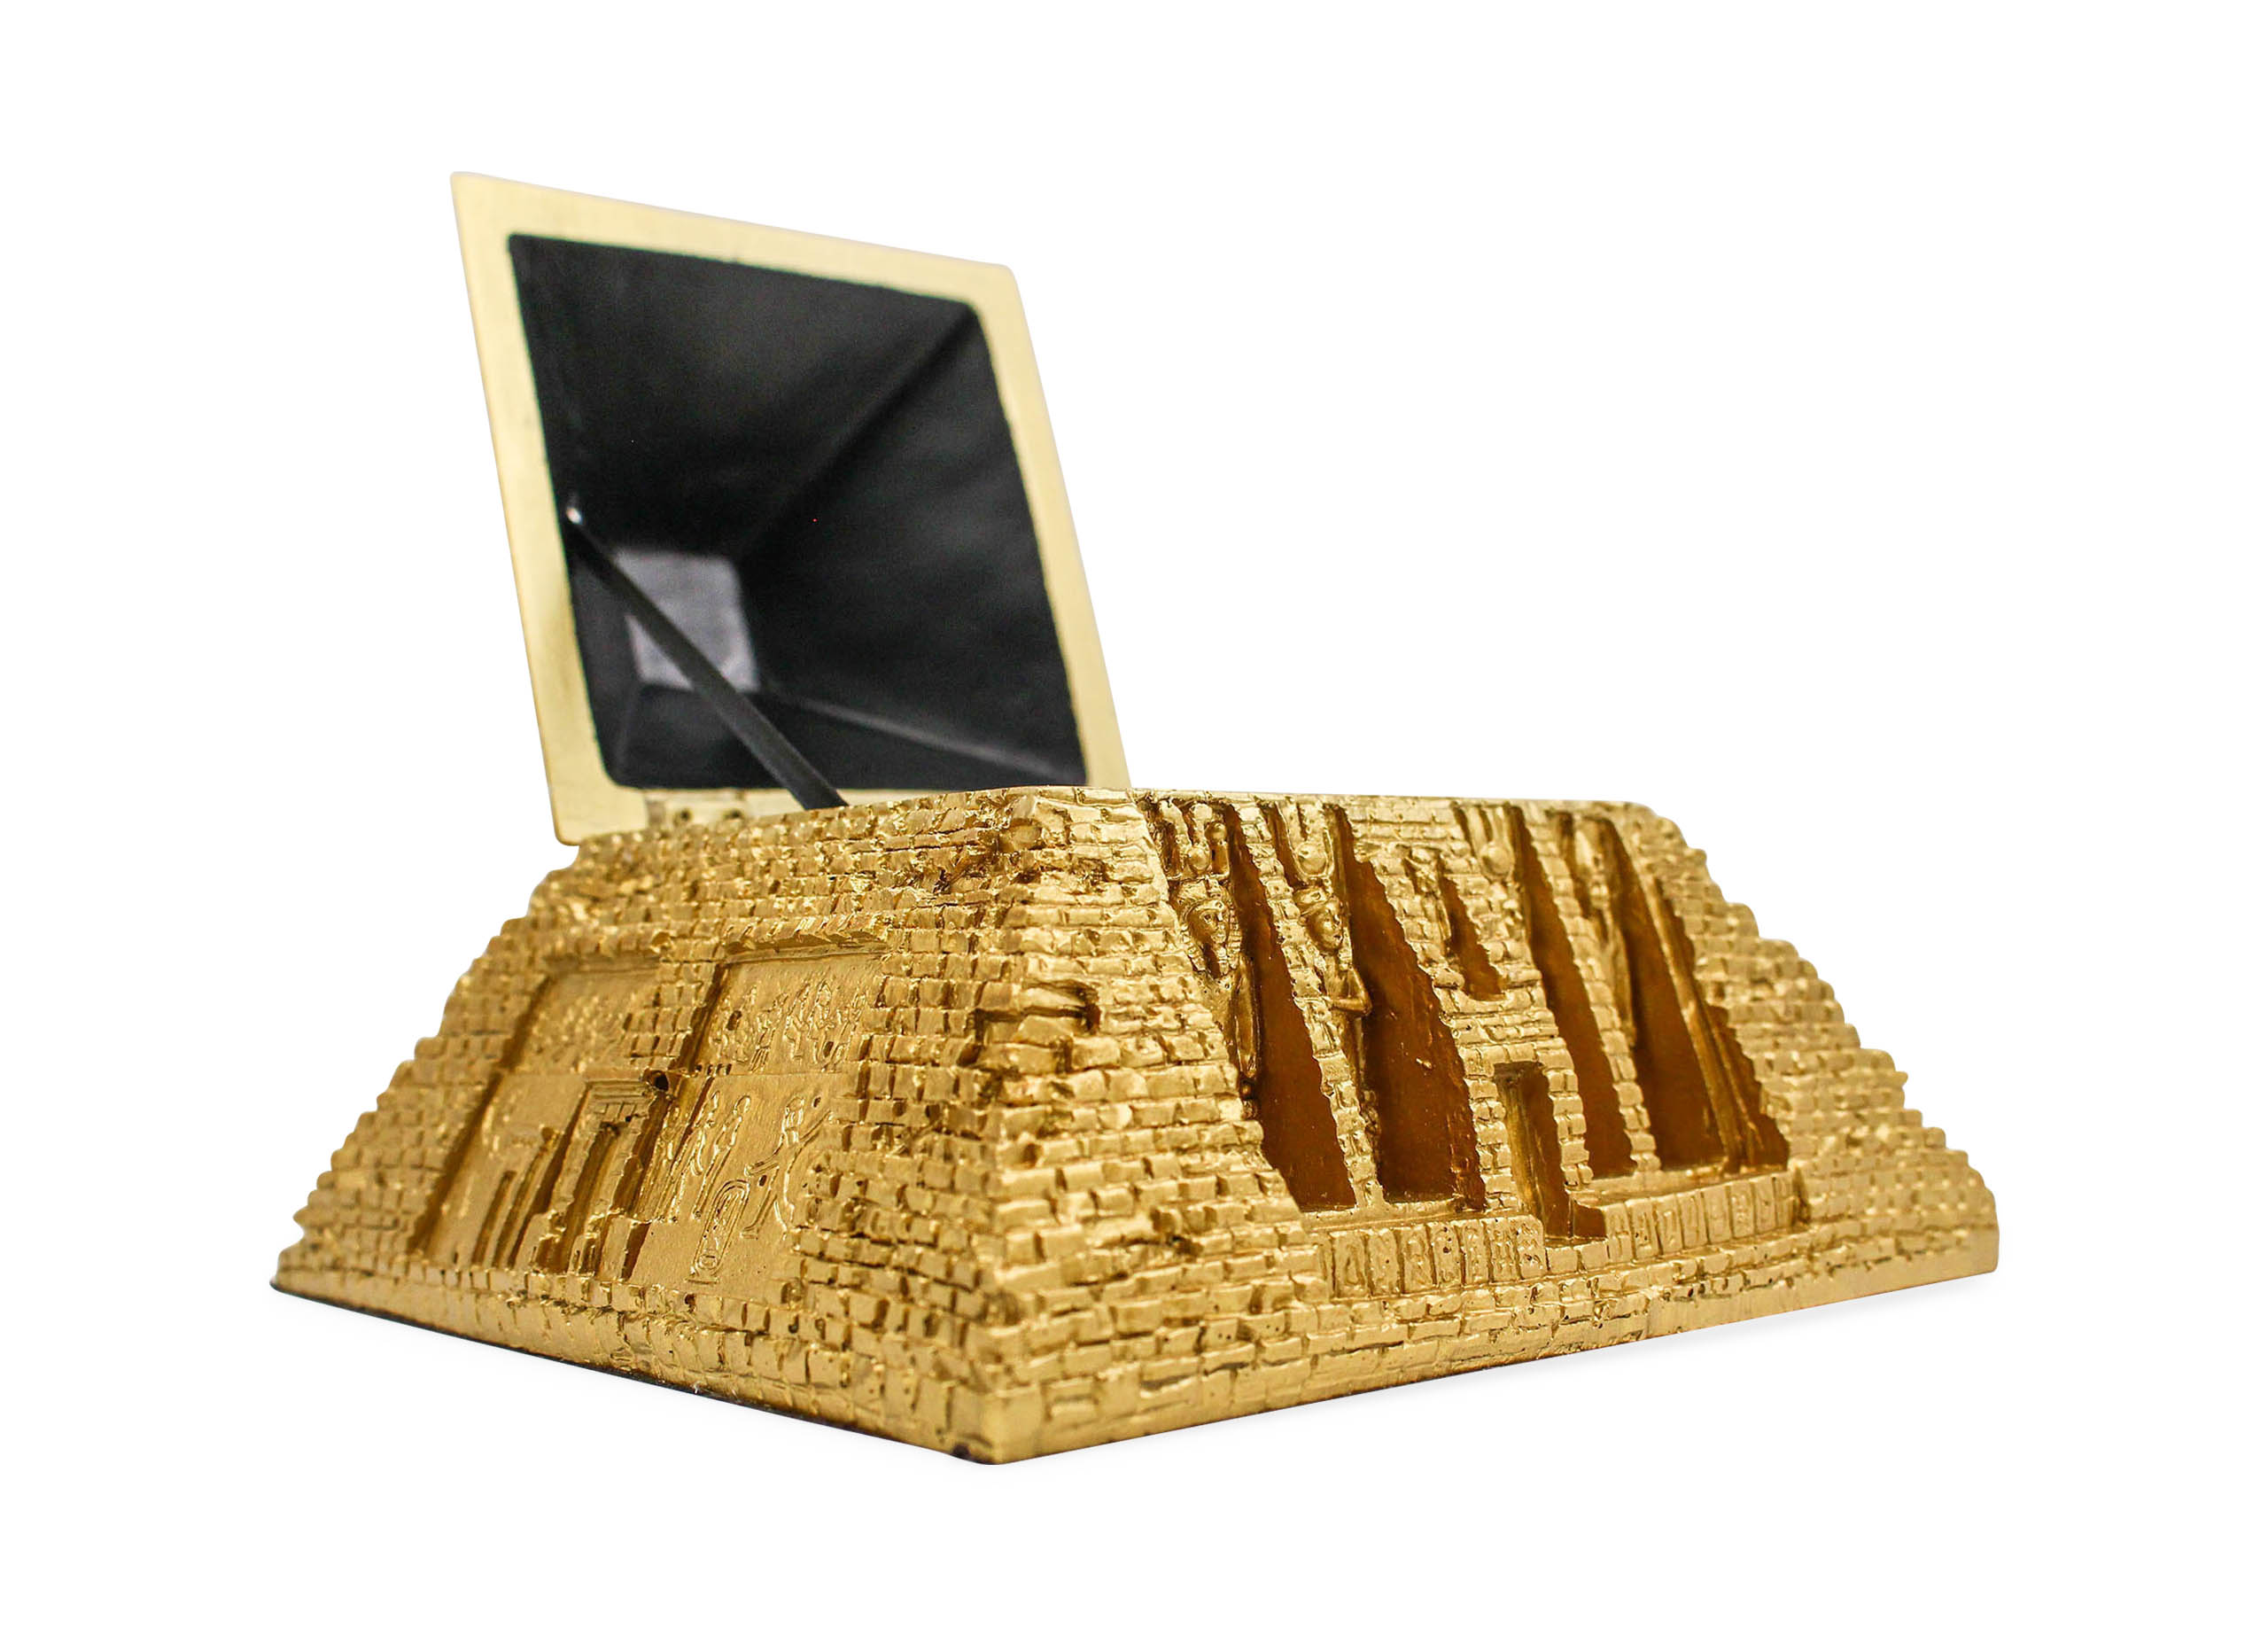 Large Golden Egyptian Pyramid Trinket Box - Crystal Dreams